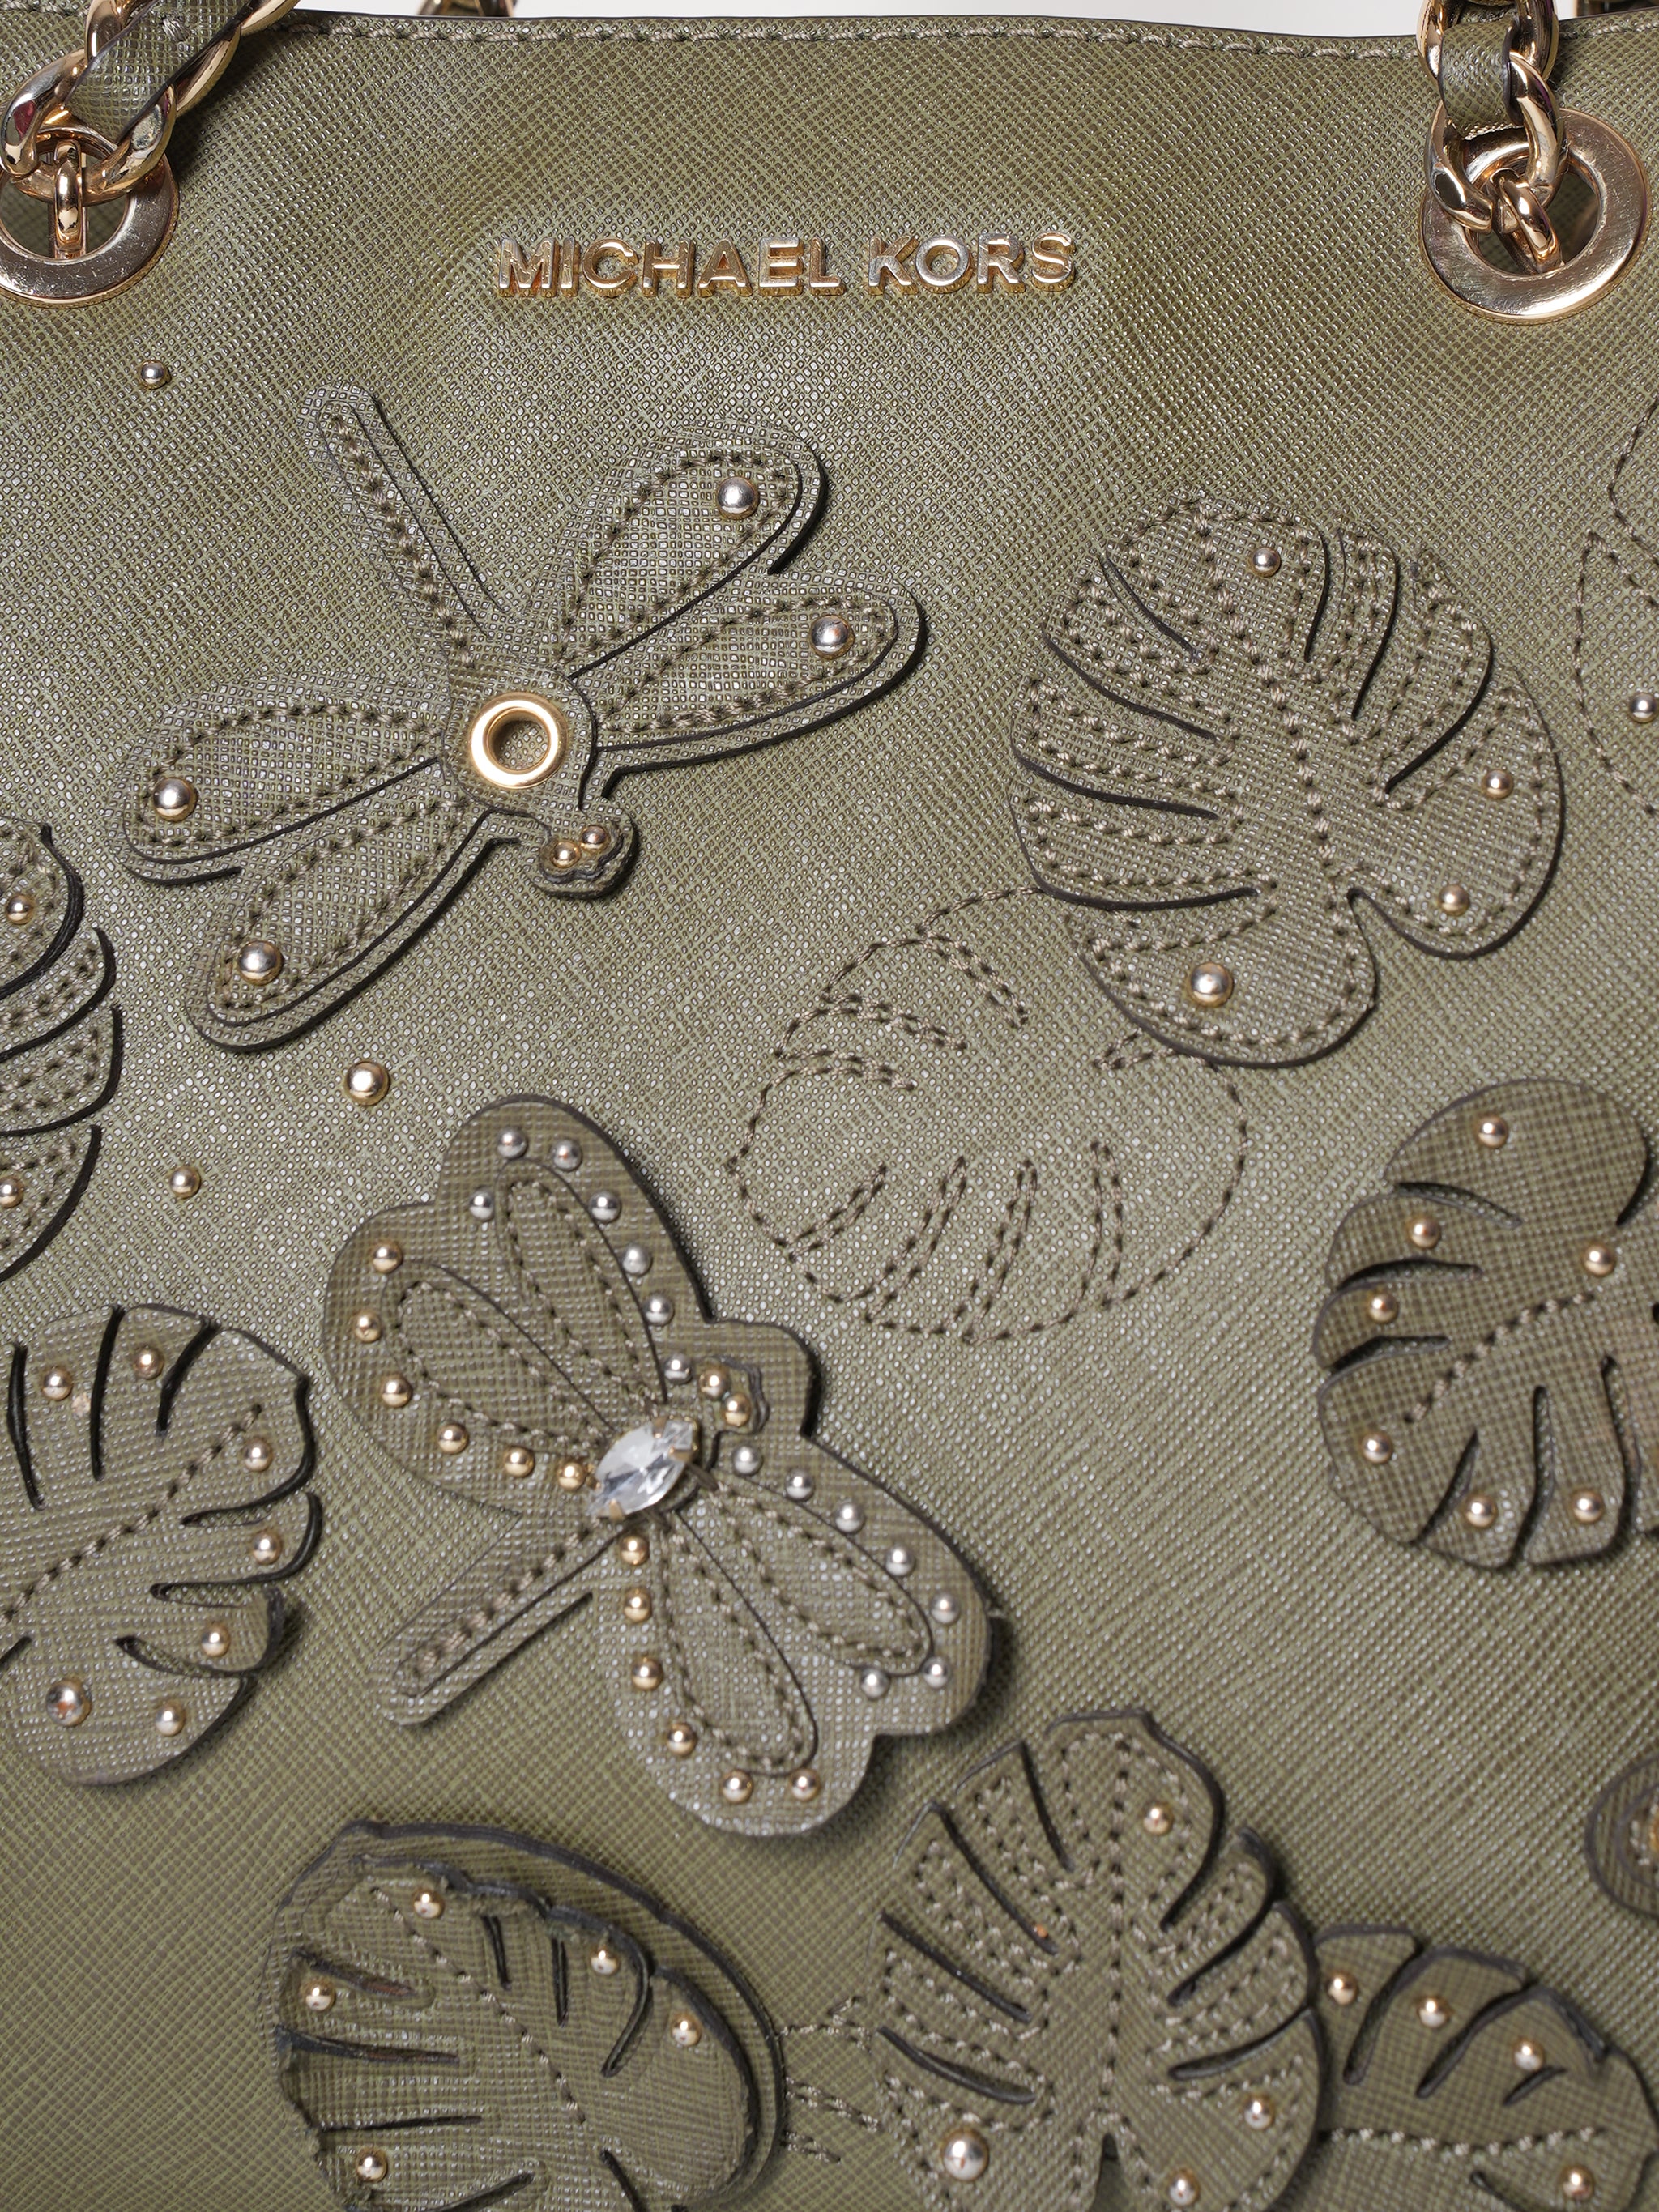 Michael Kors Dragonfly Susannah Leather Tote Bag